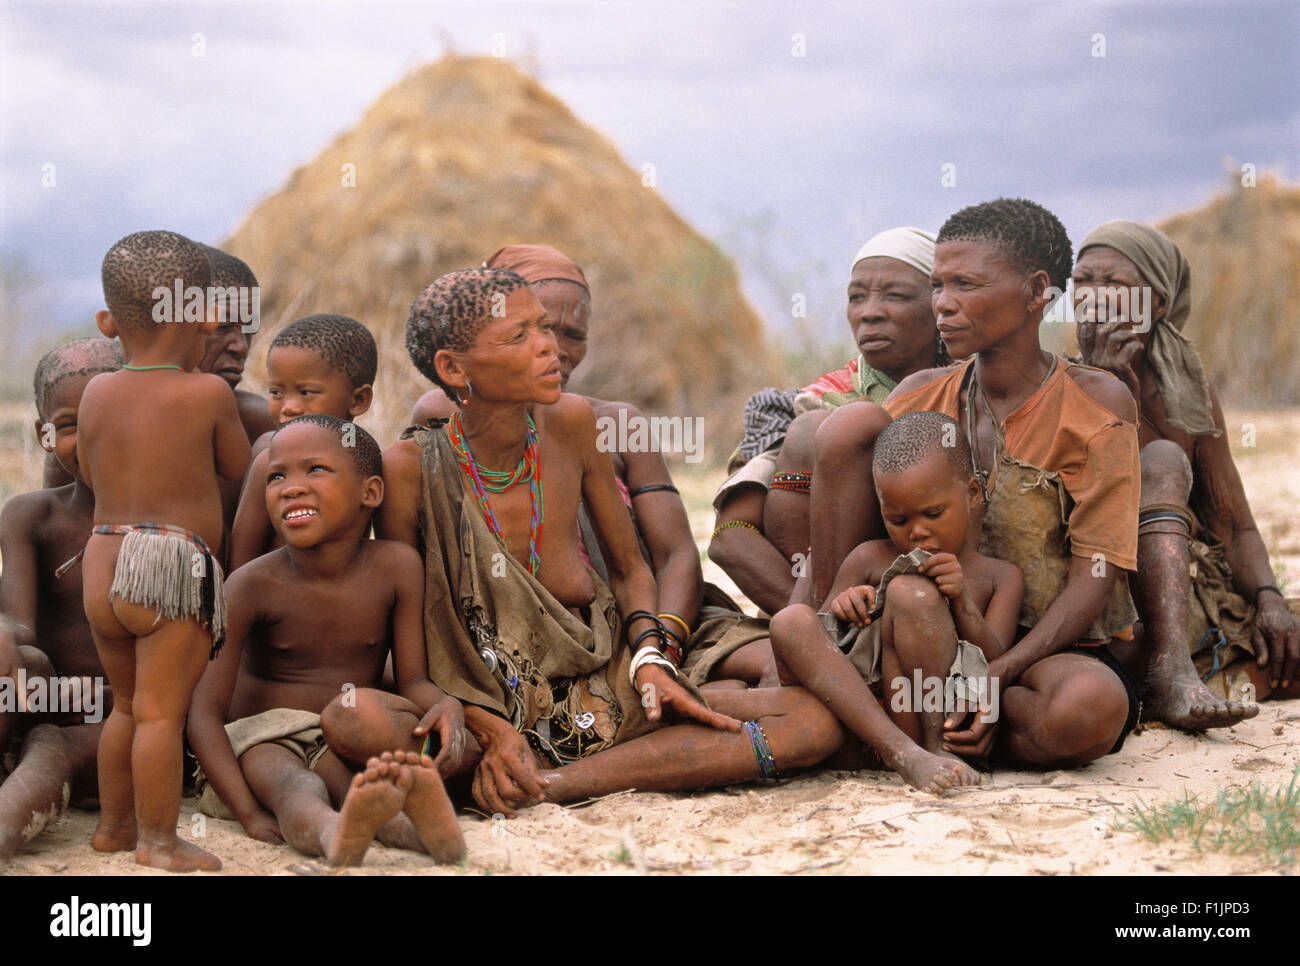 Bush personas sentadas afuera, Namibia, África Foto de stock